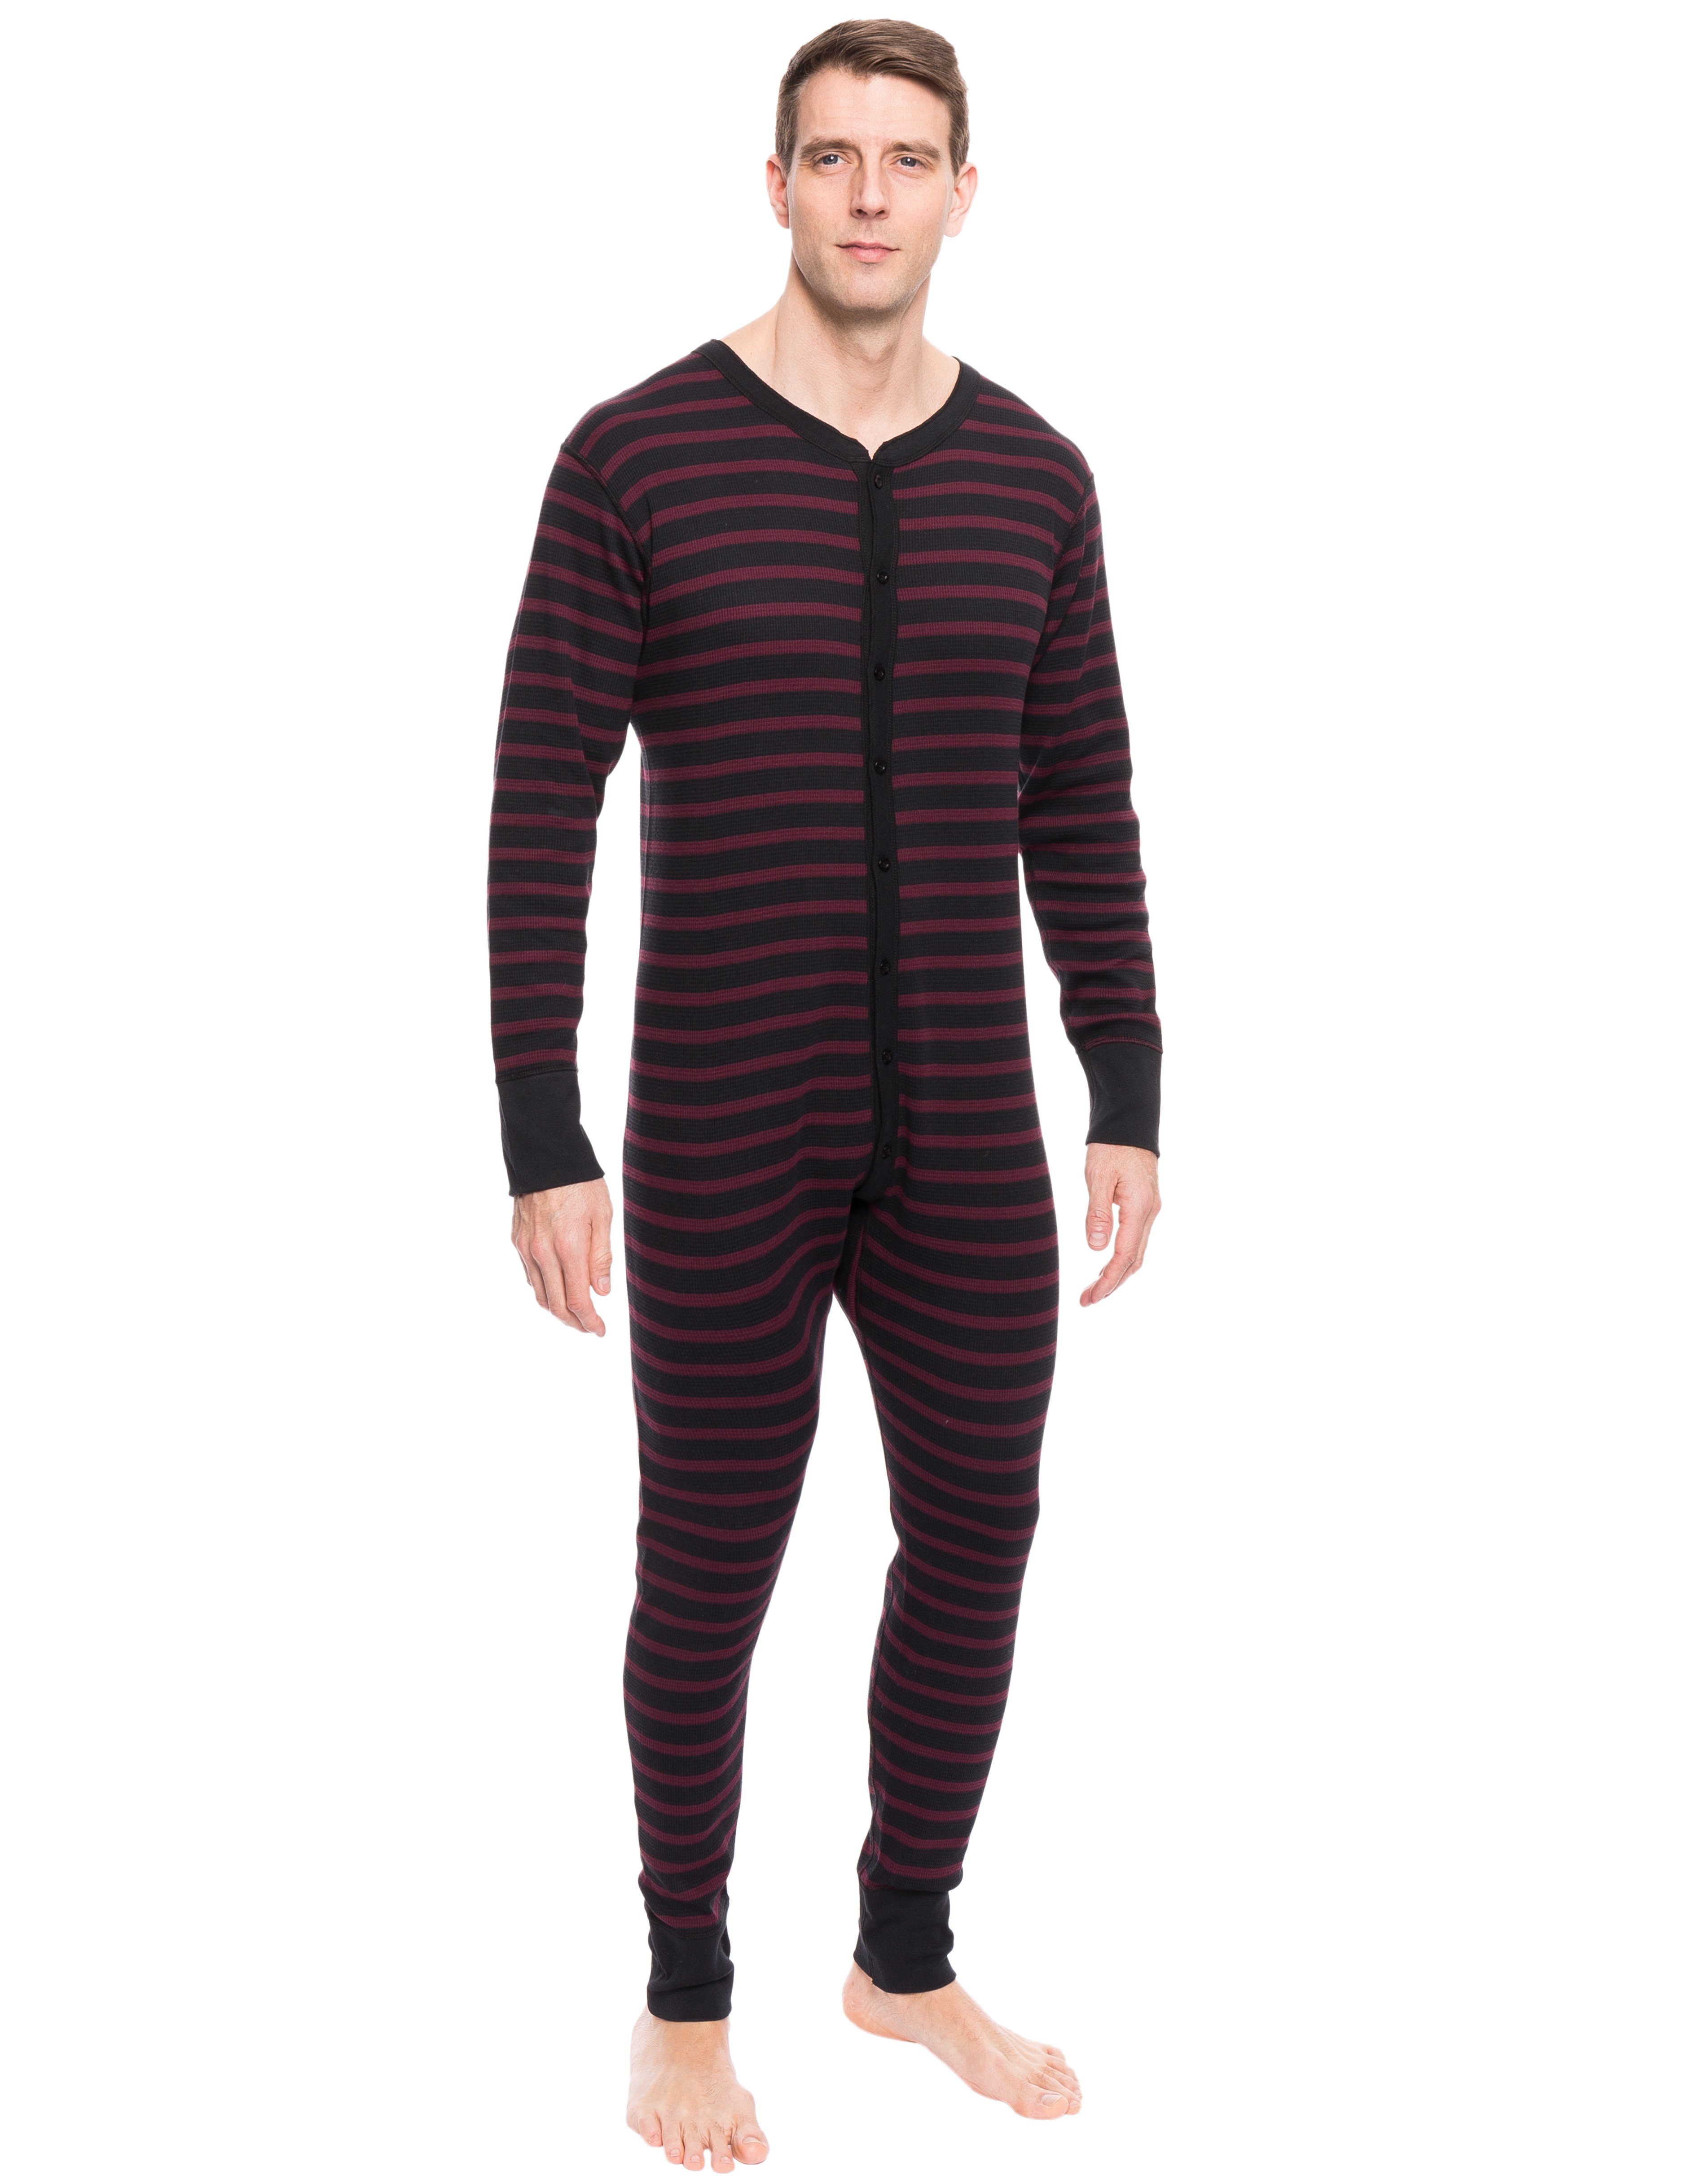 Men's Waffle Knit Thermal Union Suit